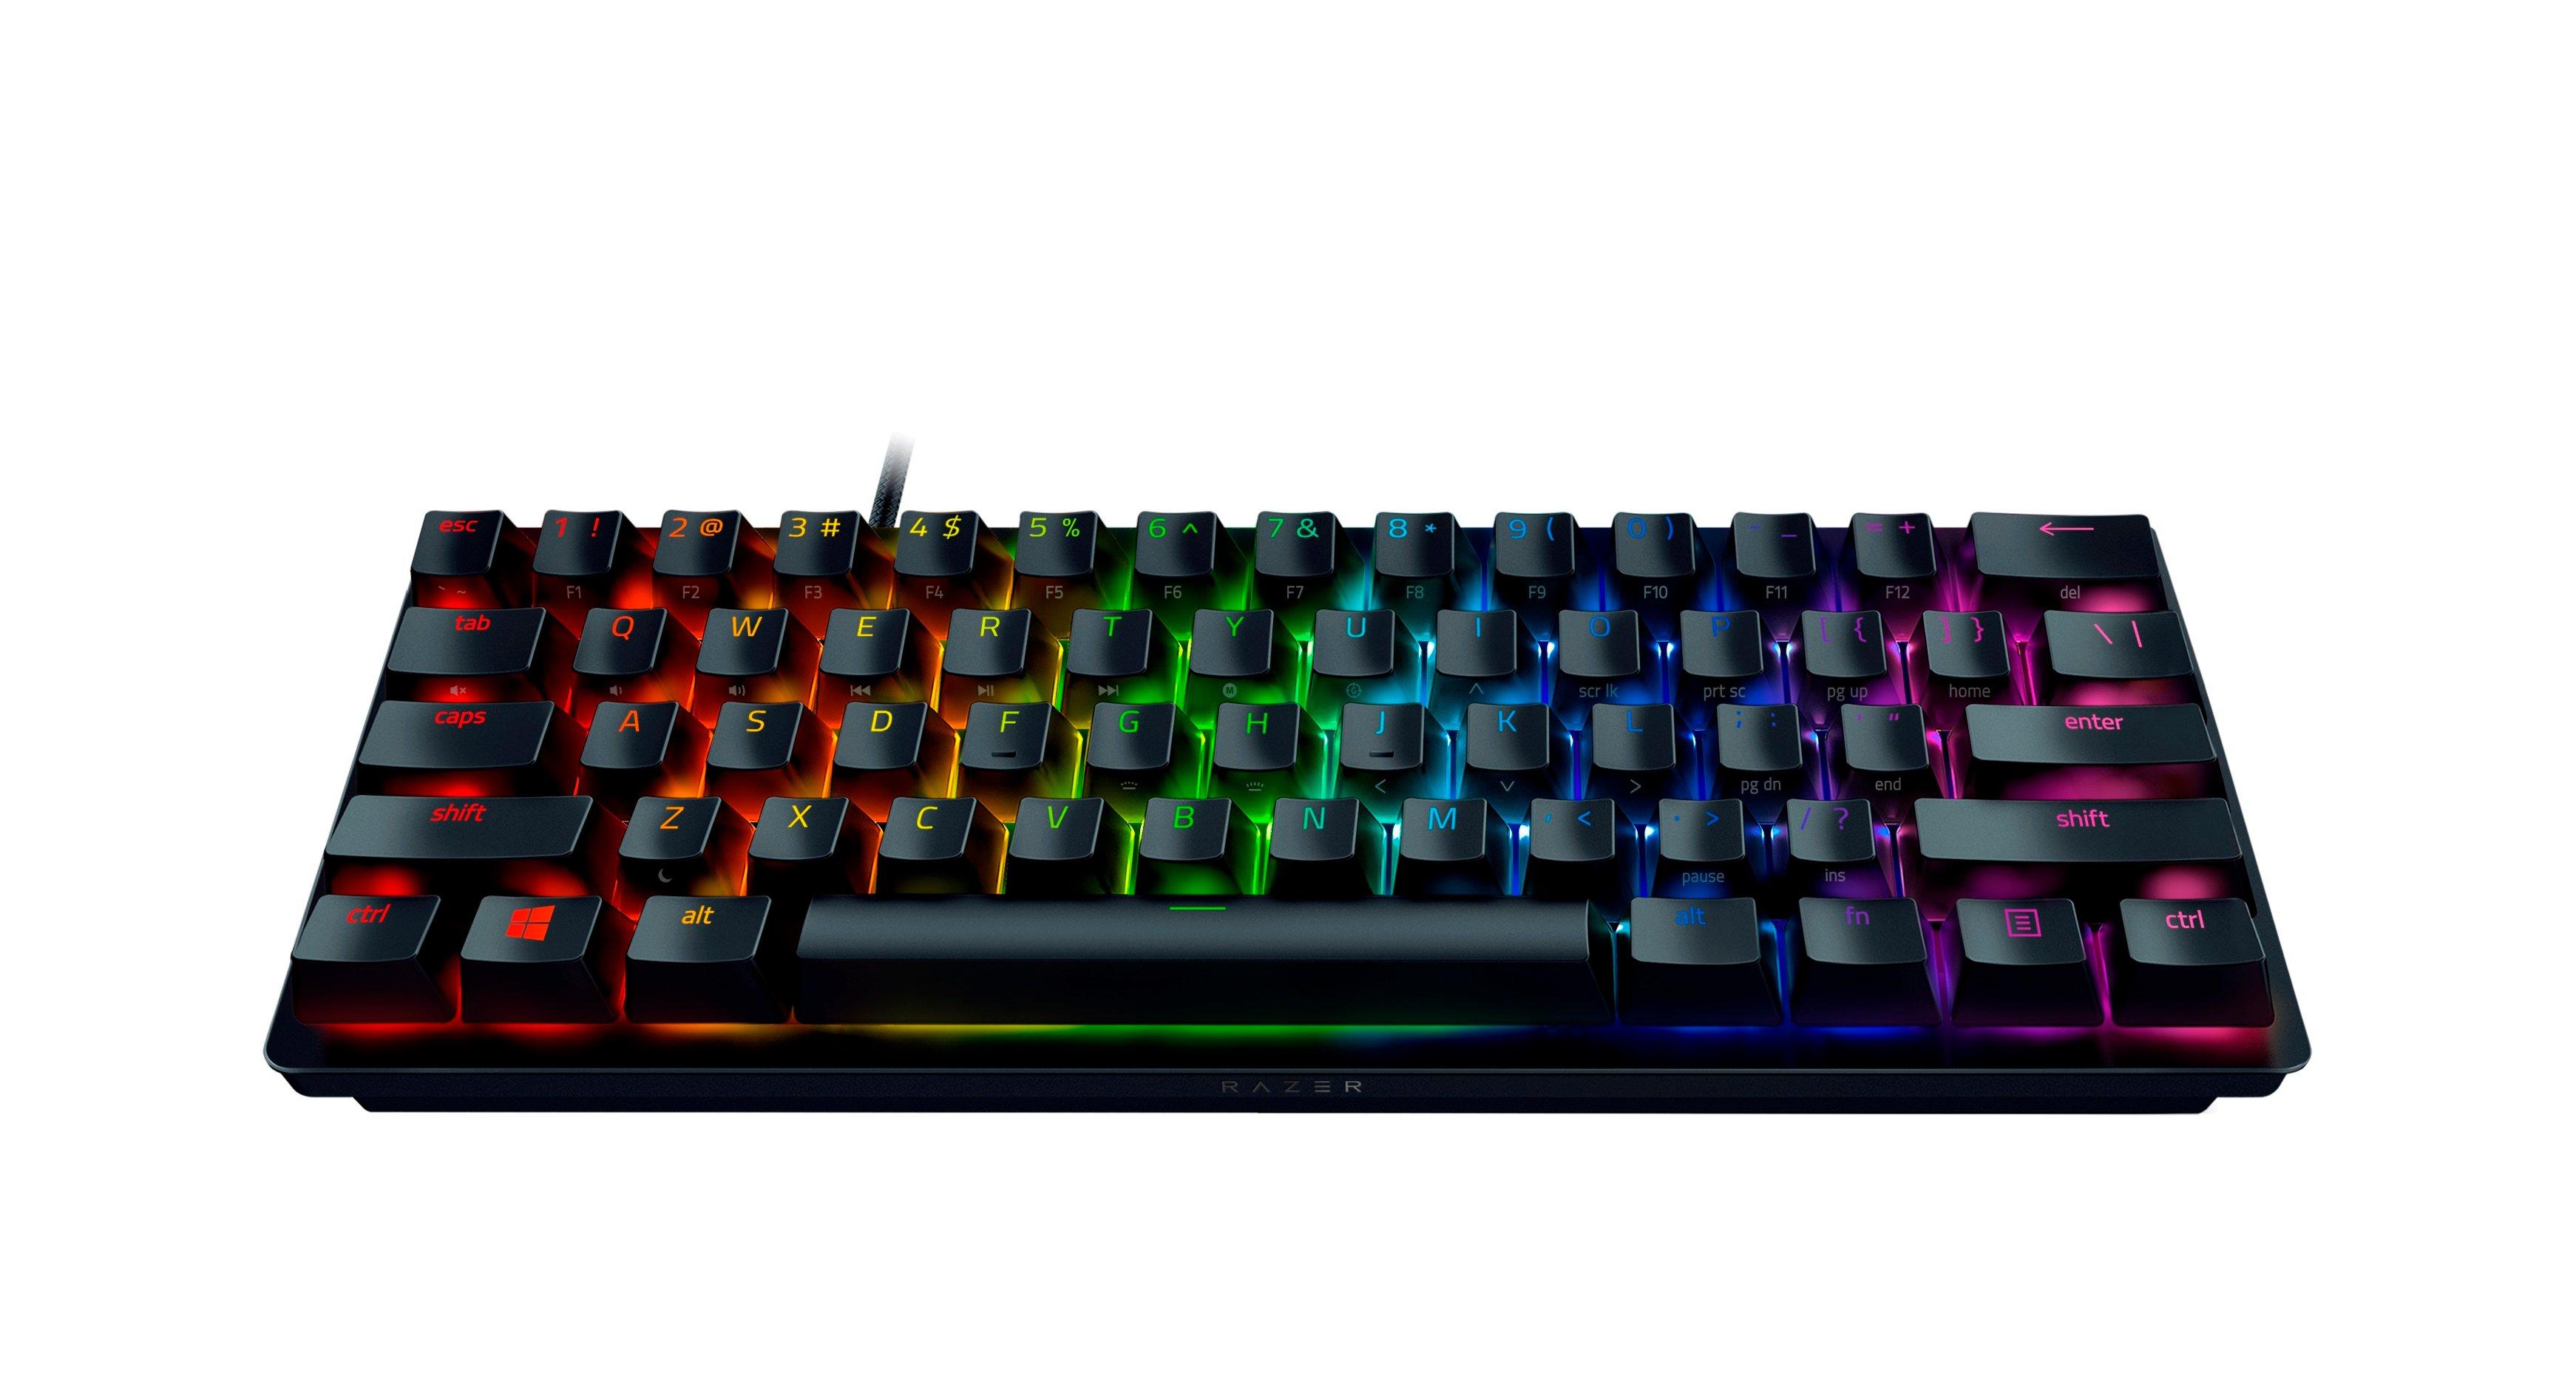 Deal Alert: Save 33% Off a Razer Huntsman 60% Mini Gaming Keyboard